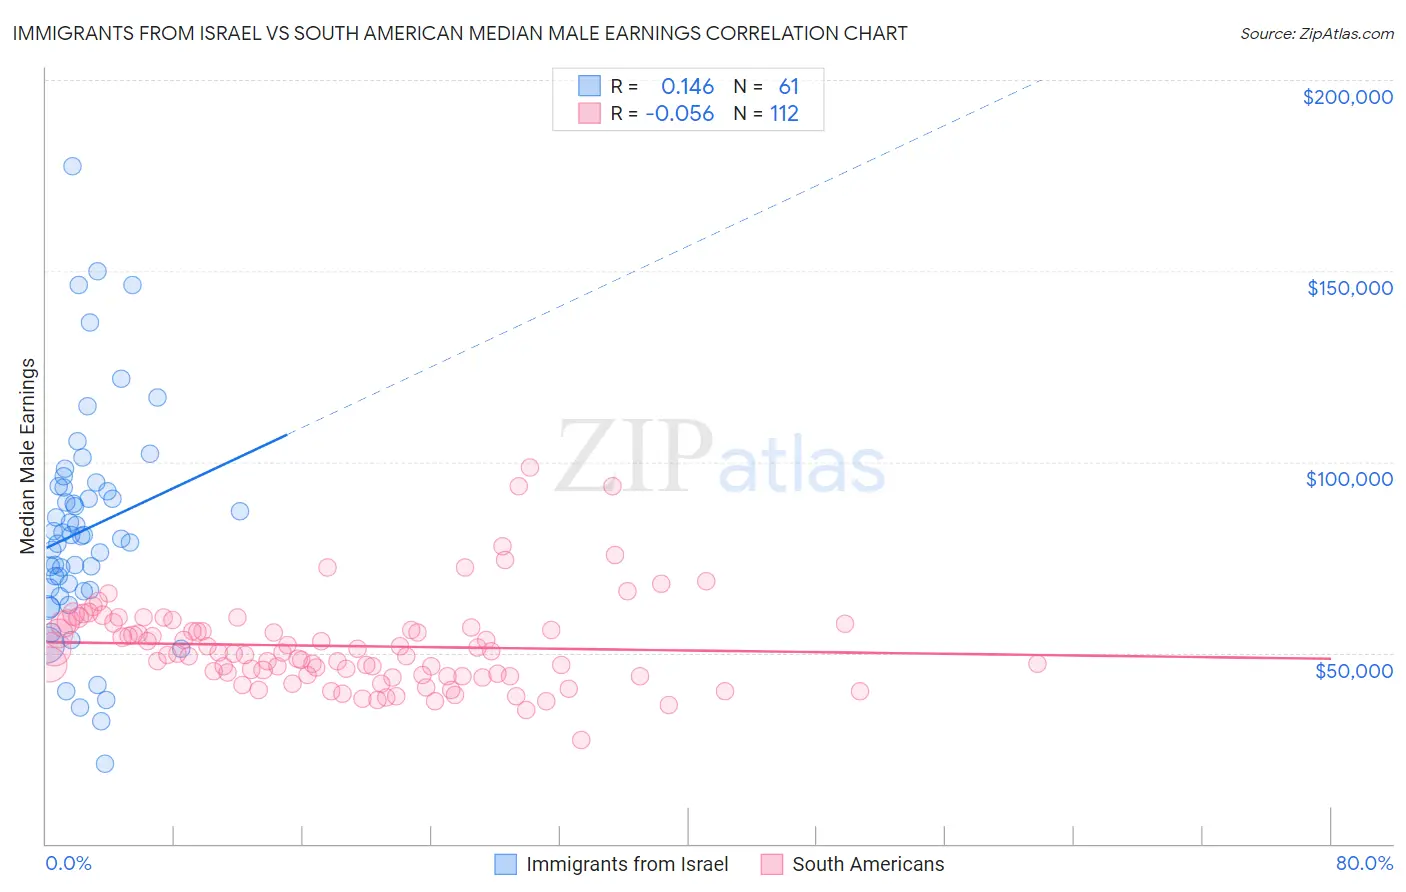 Immigrants from Israel vs South American Median Male Earnings